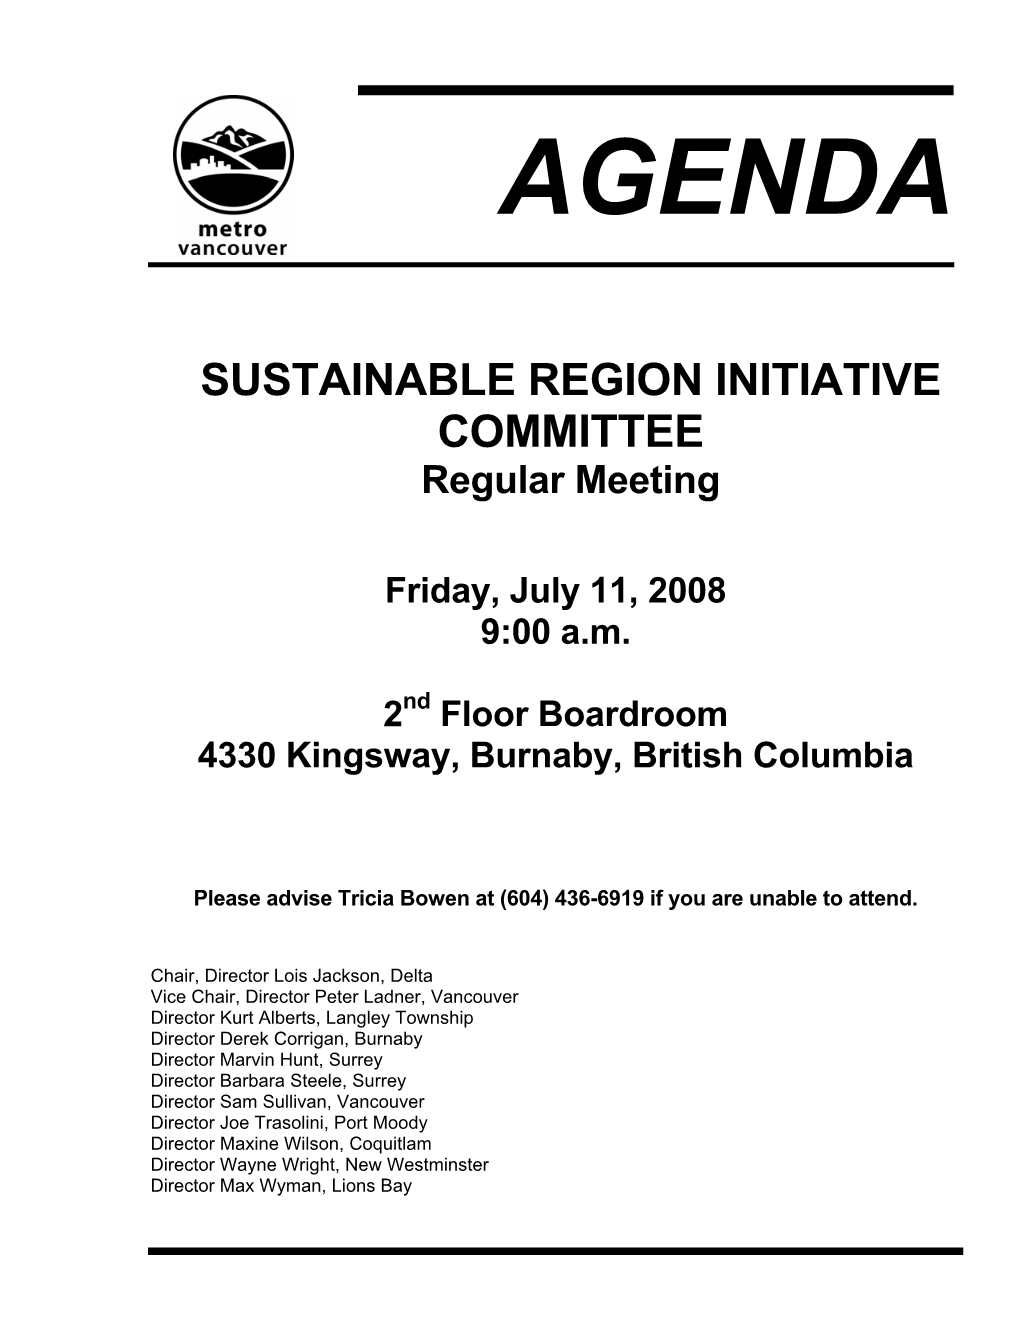 Sustainable Region Initiative Committee Meeting Agenda July 11